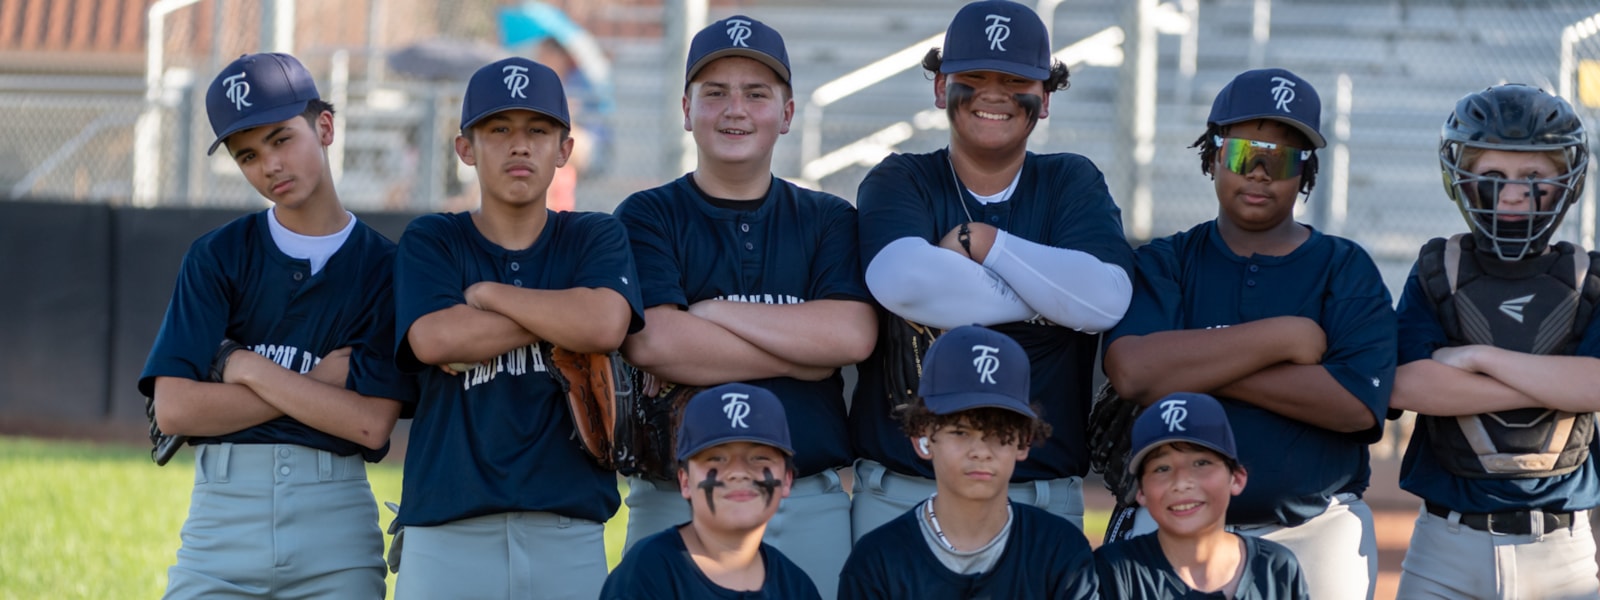 Thompson Ranch Baseball team pose for photo